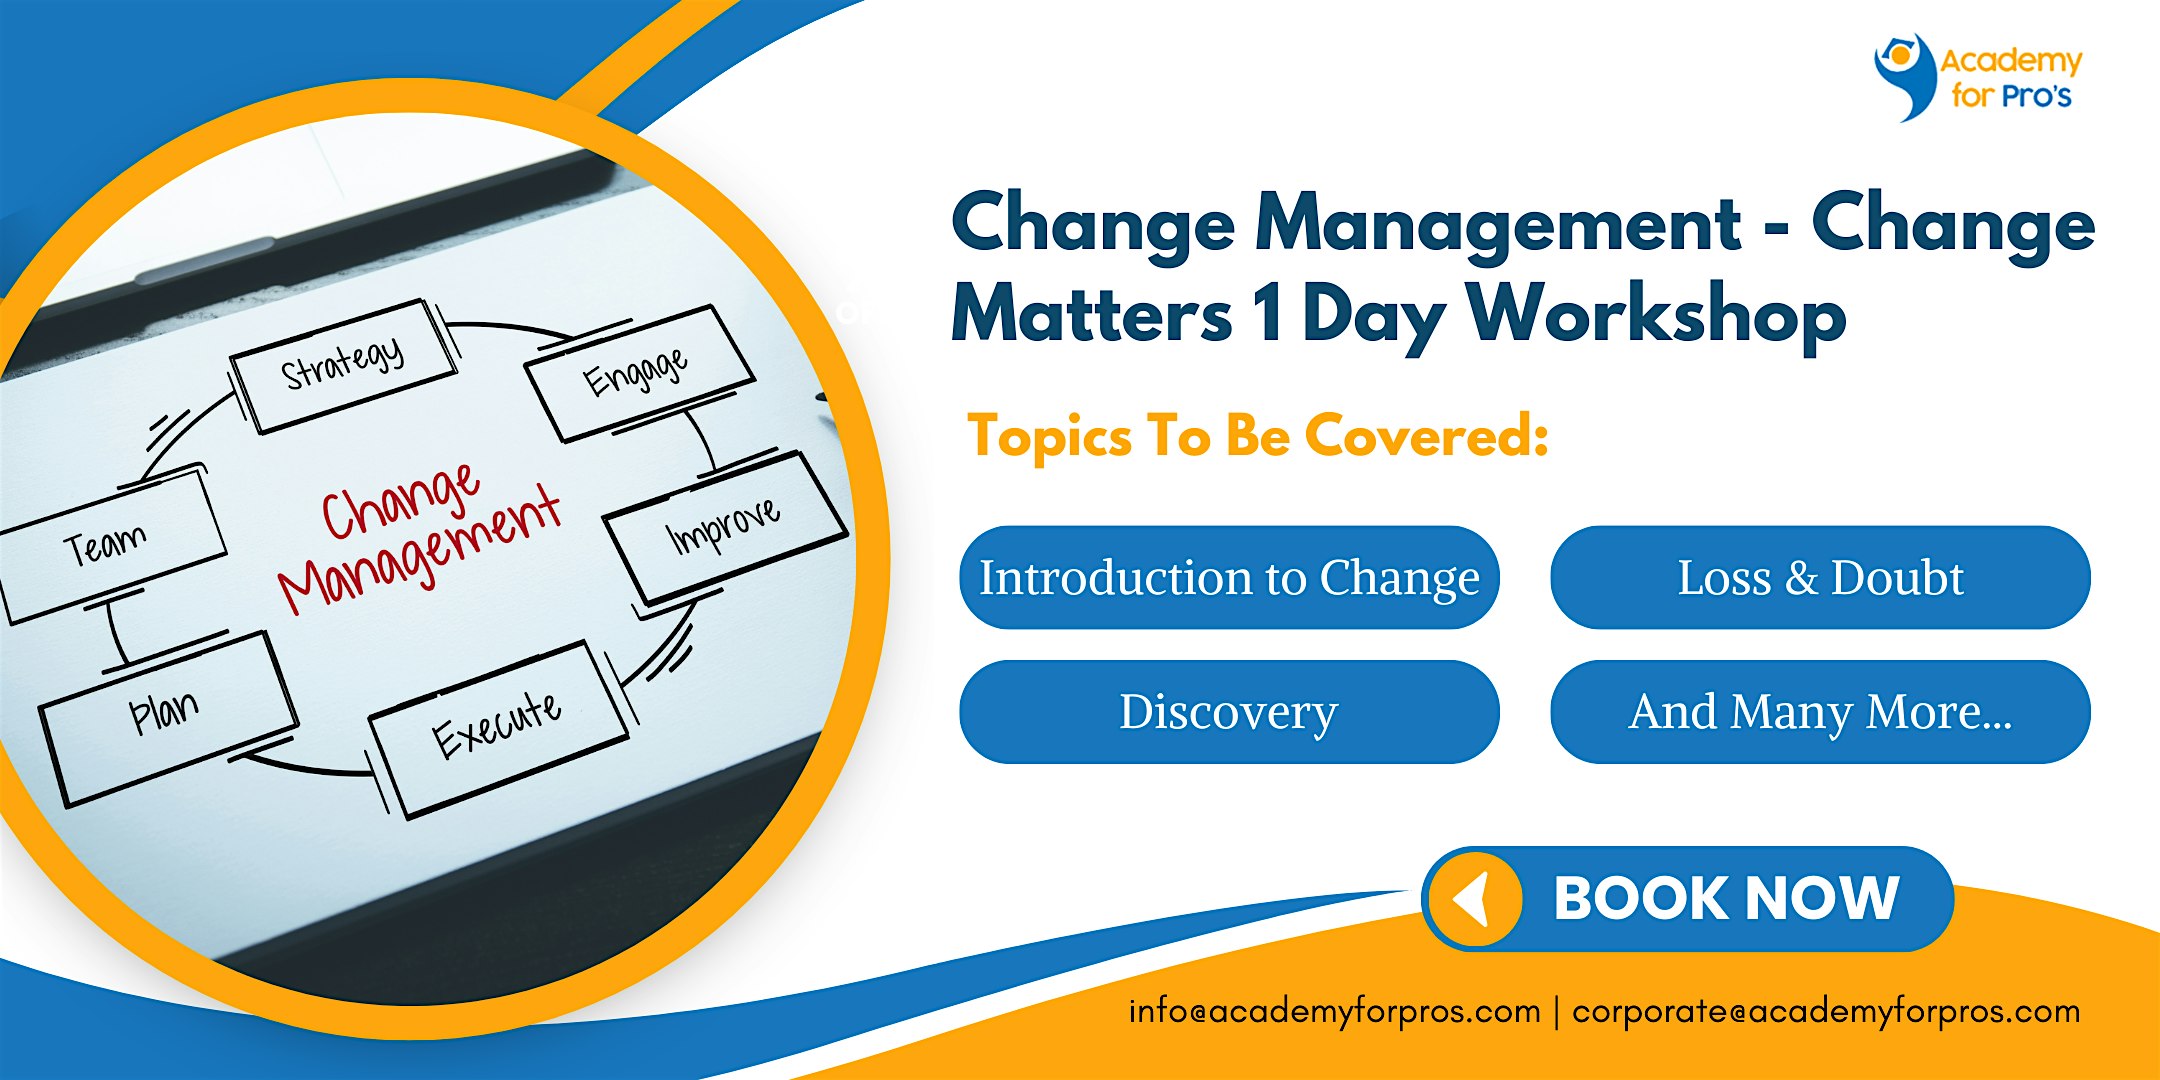 Change Management - Change Matters 1 Day Workshop in Reno, NV